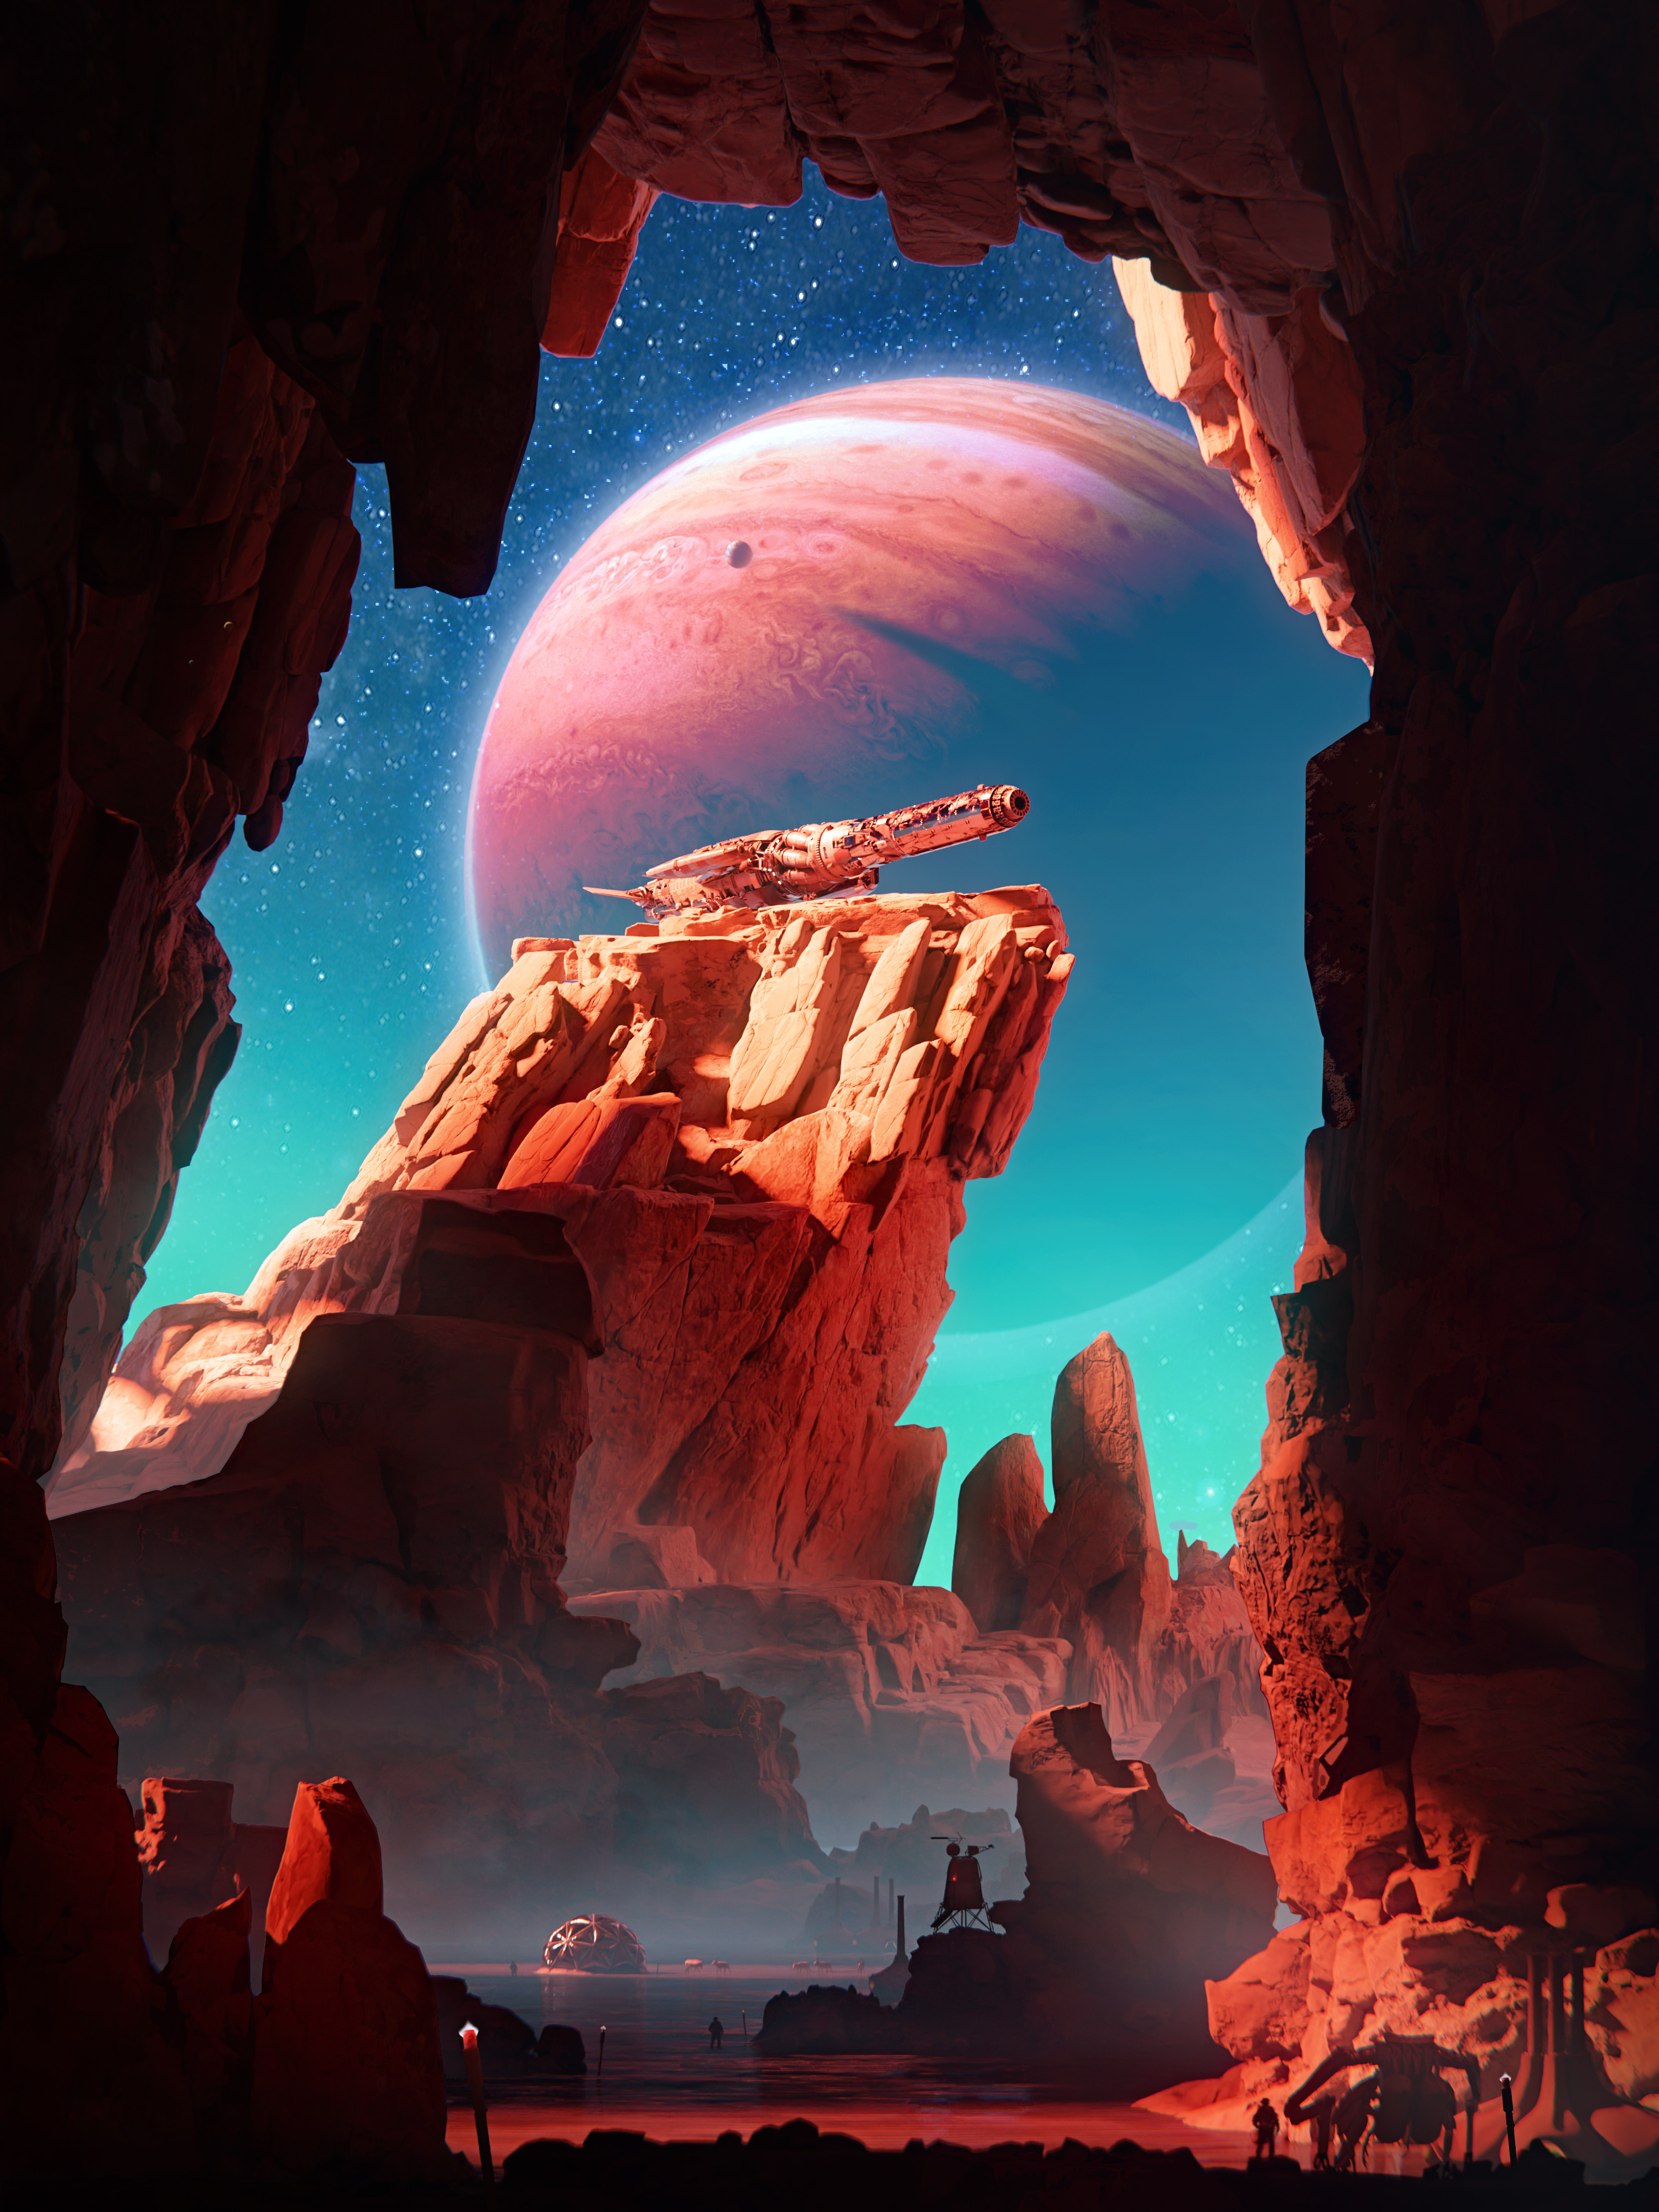 Digital Digital Art Artwork Illustration Space Planet Fantasy Art Spaceship Cave Mountains Rock Form 3000x4000